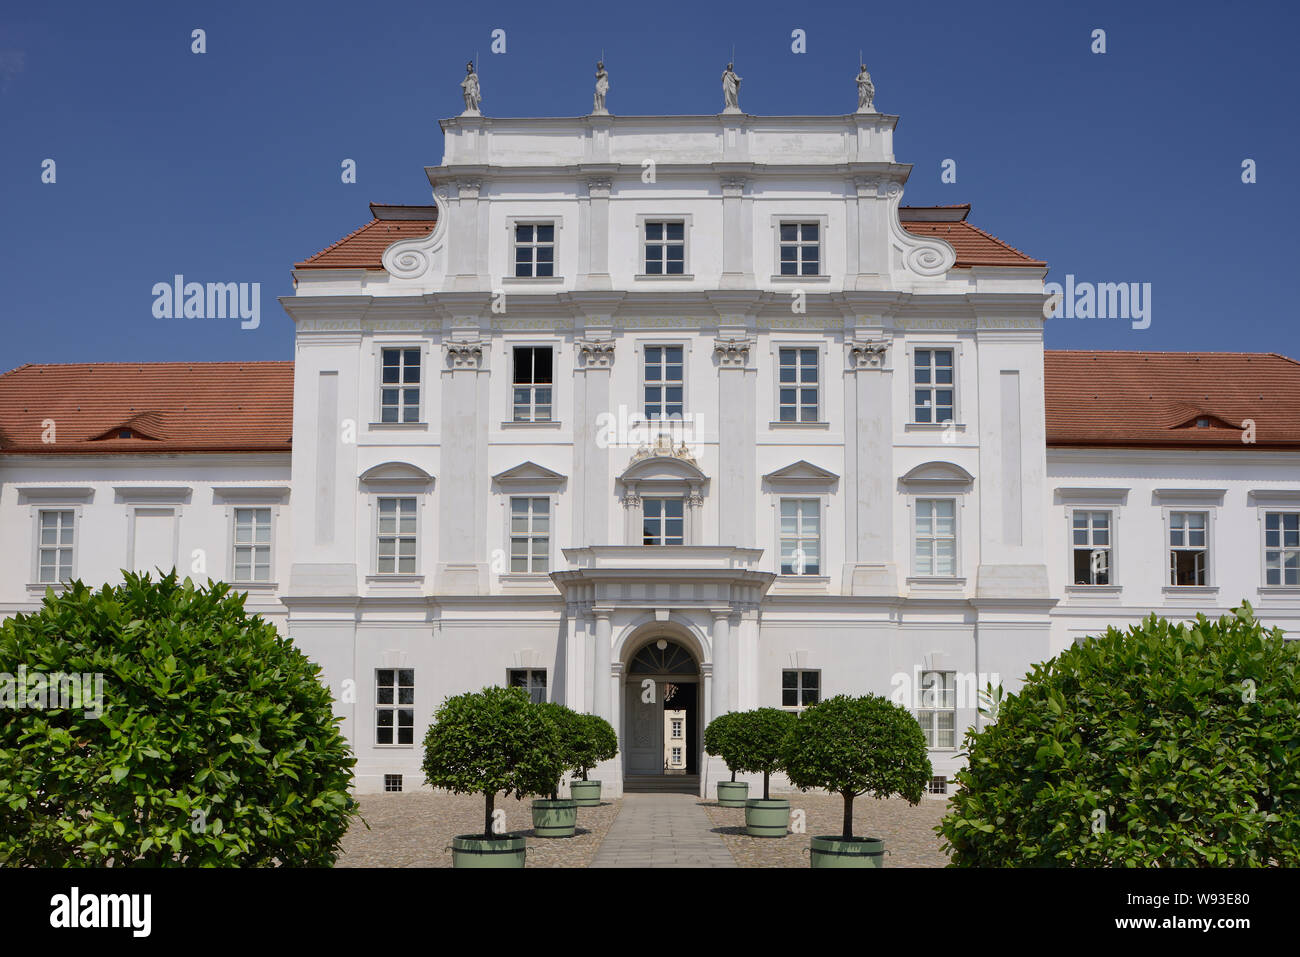 Schloss Oranienburg Palace, oldest Baroque palace in Mark Brandenburg, Oranienburg, Brandenburg, Germany, Europe Stock Photo